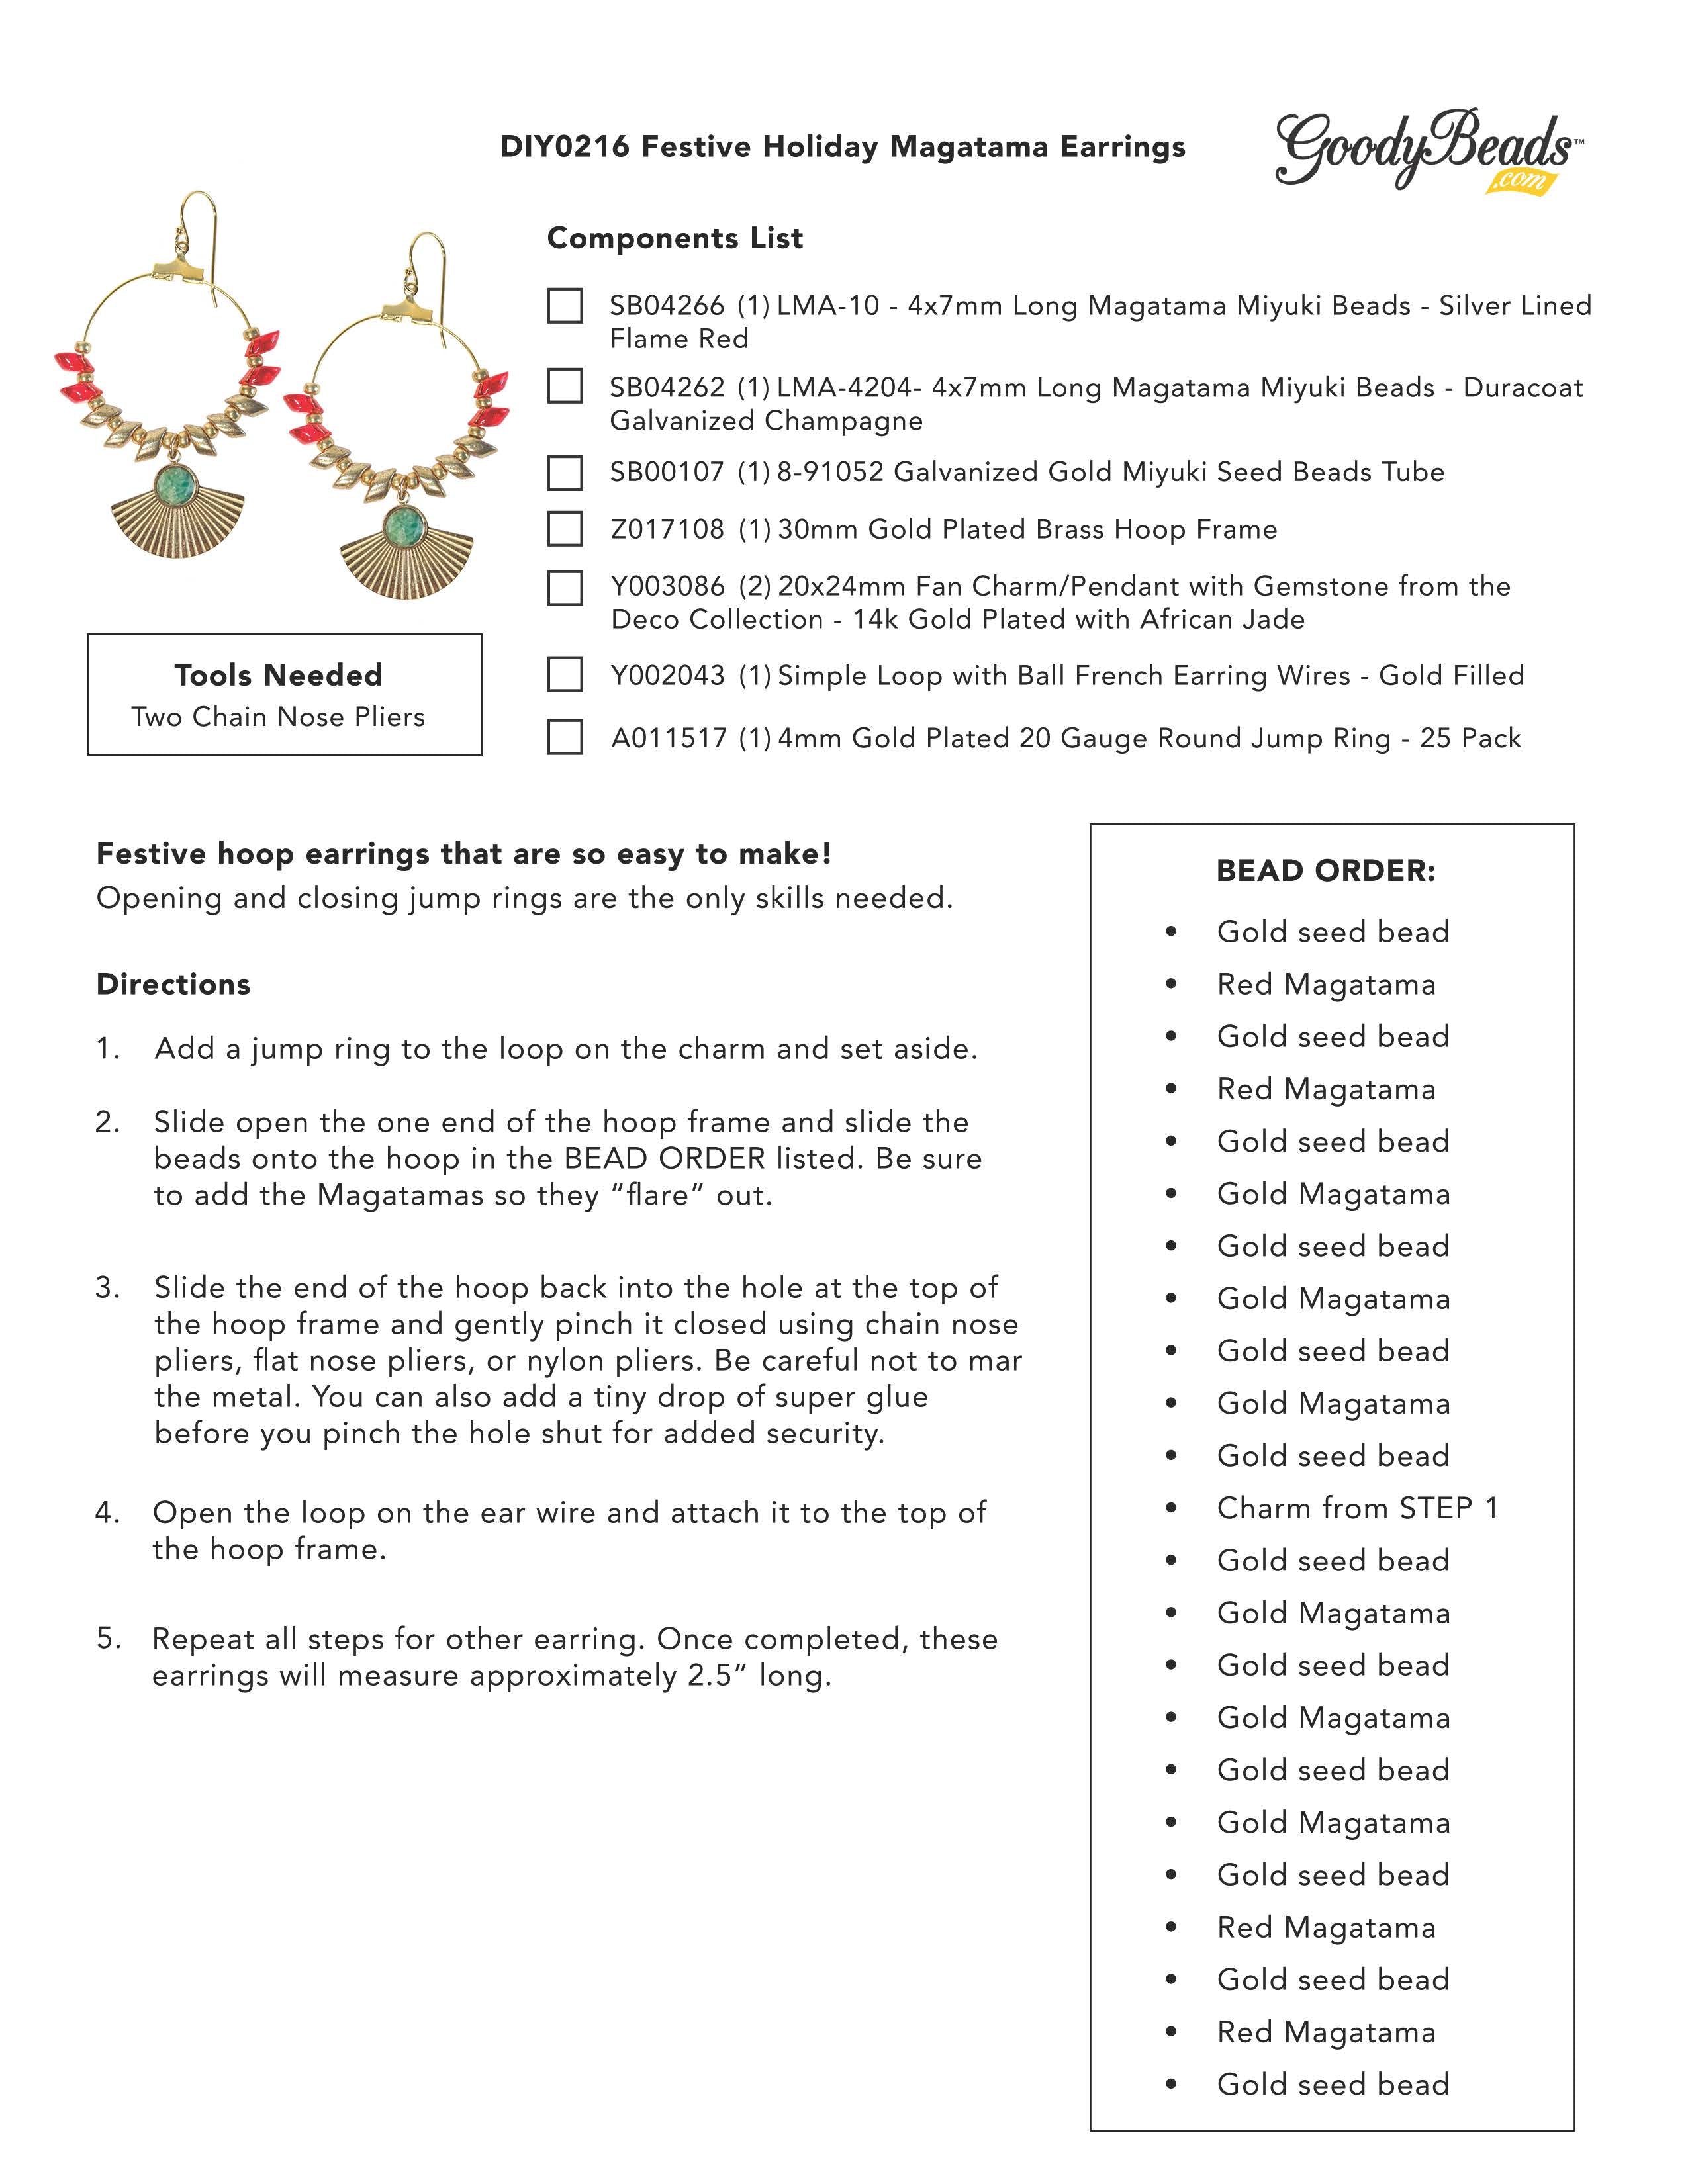 INSTRUCTIONS for Festive Holiday Magatama Earrings